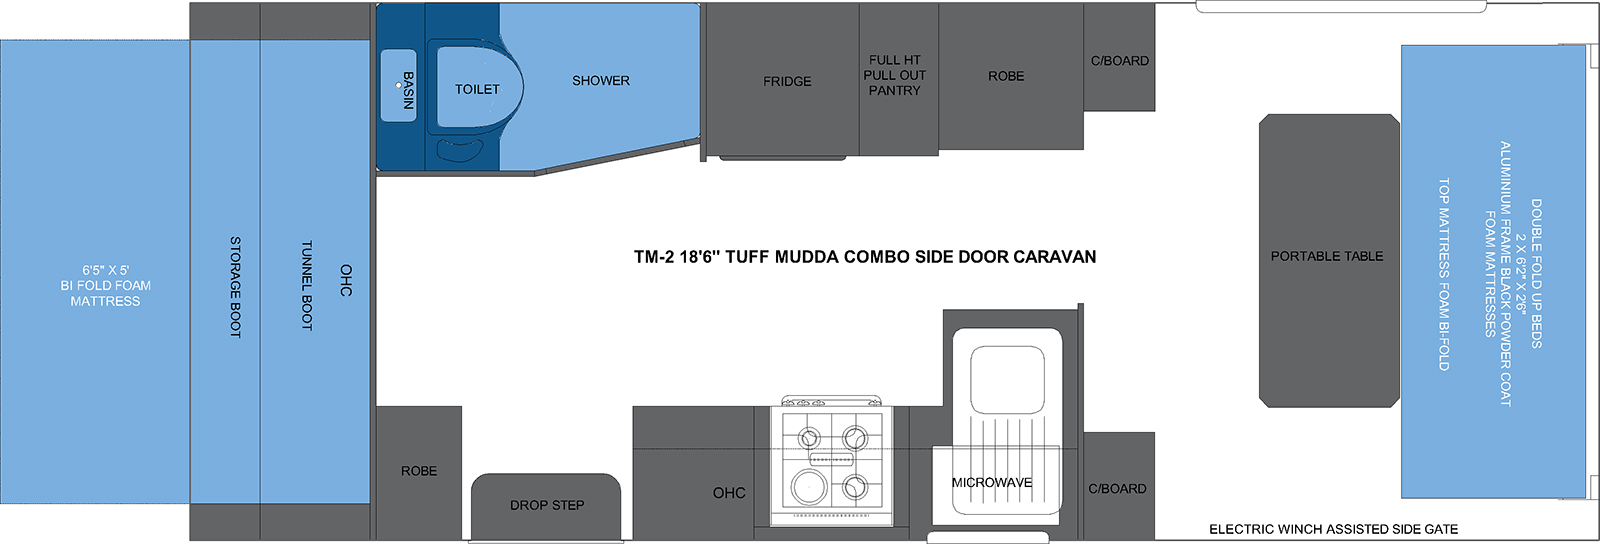 TM-2 18'6 TUFF MJUDDA COMBO SIDE DOOR CARAVAN